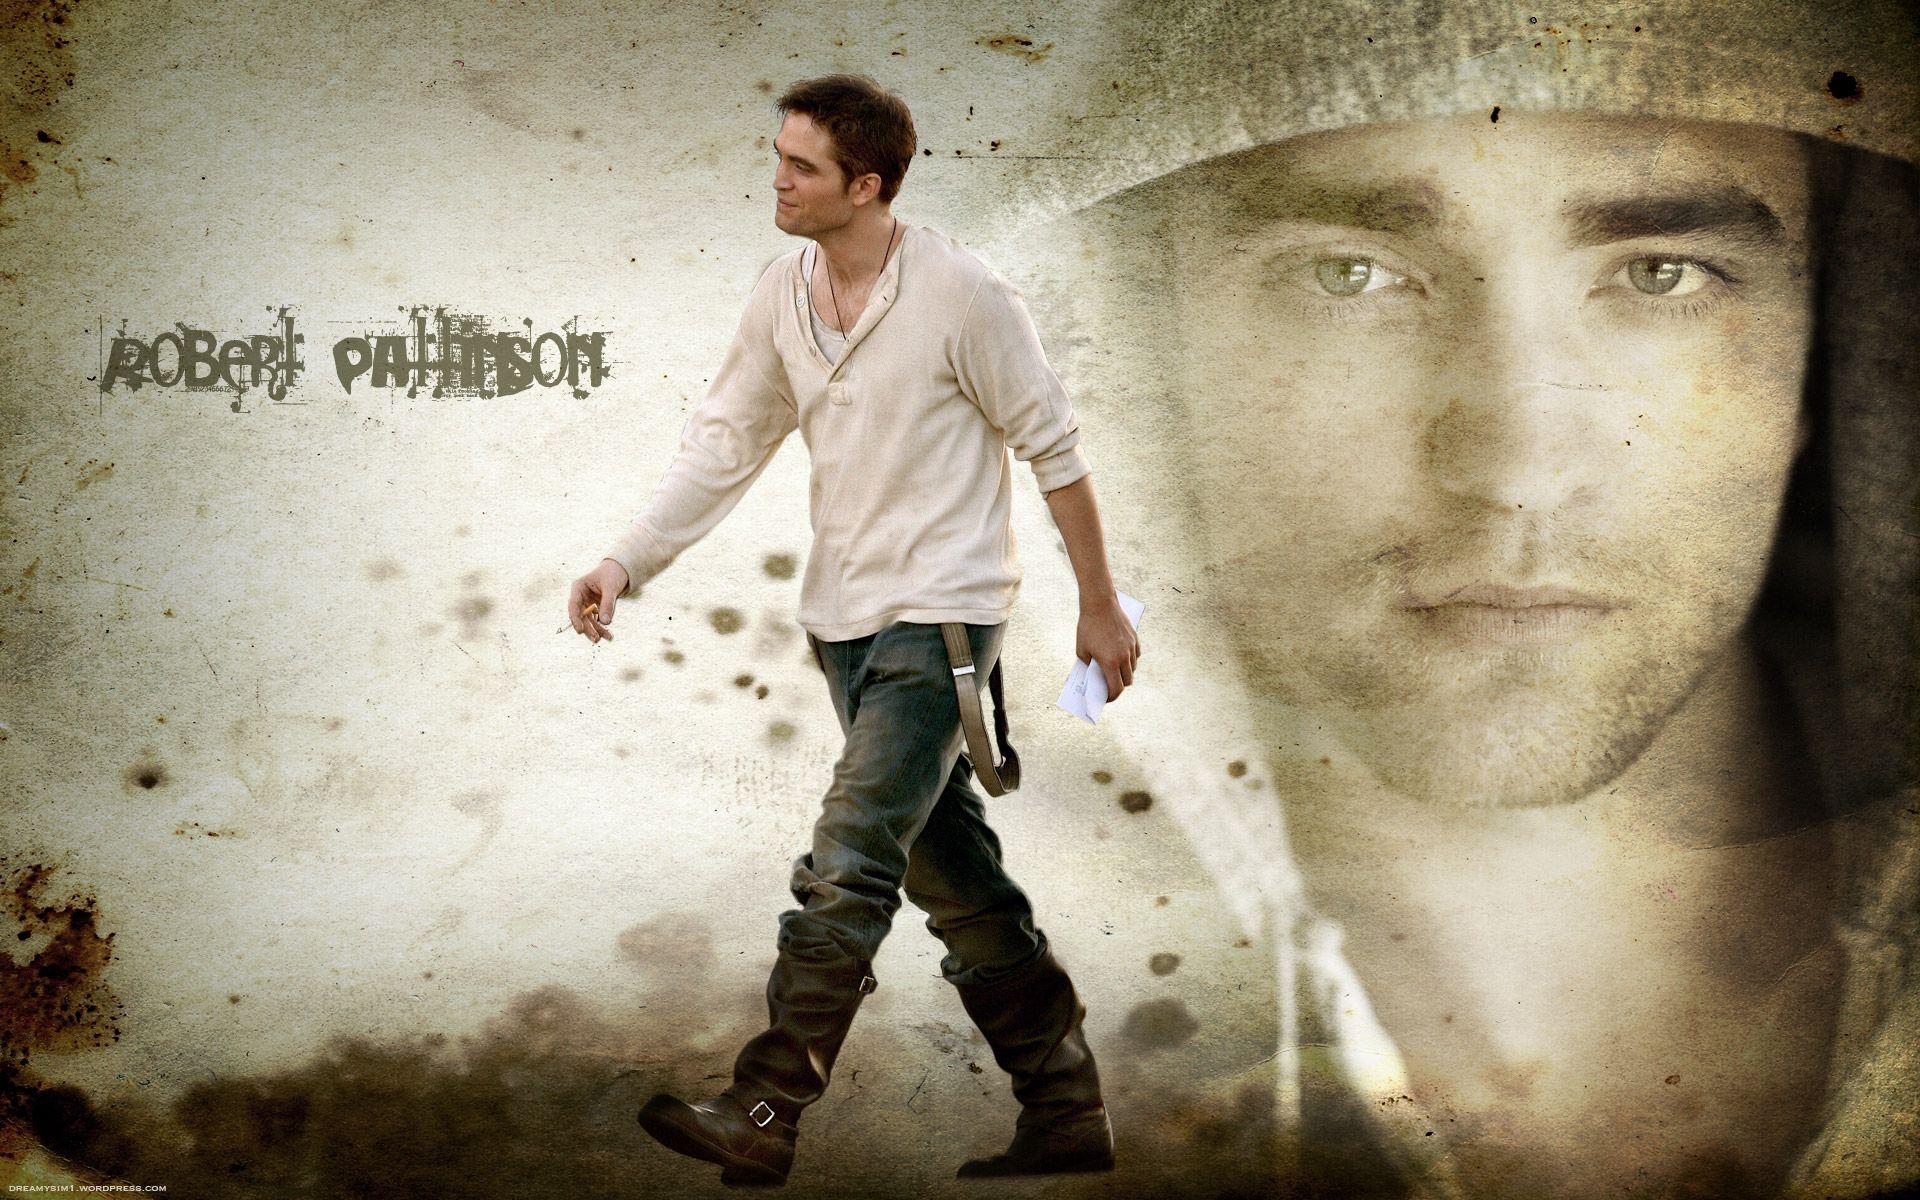 Robert Pattinson Wallpapers, Widescreen Wallpapers of Robert